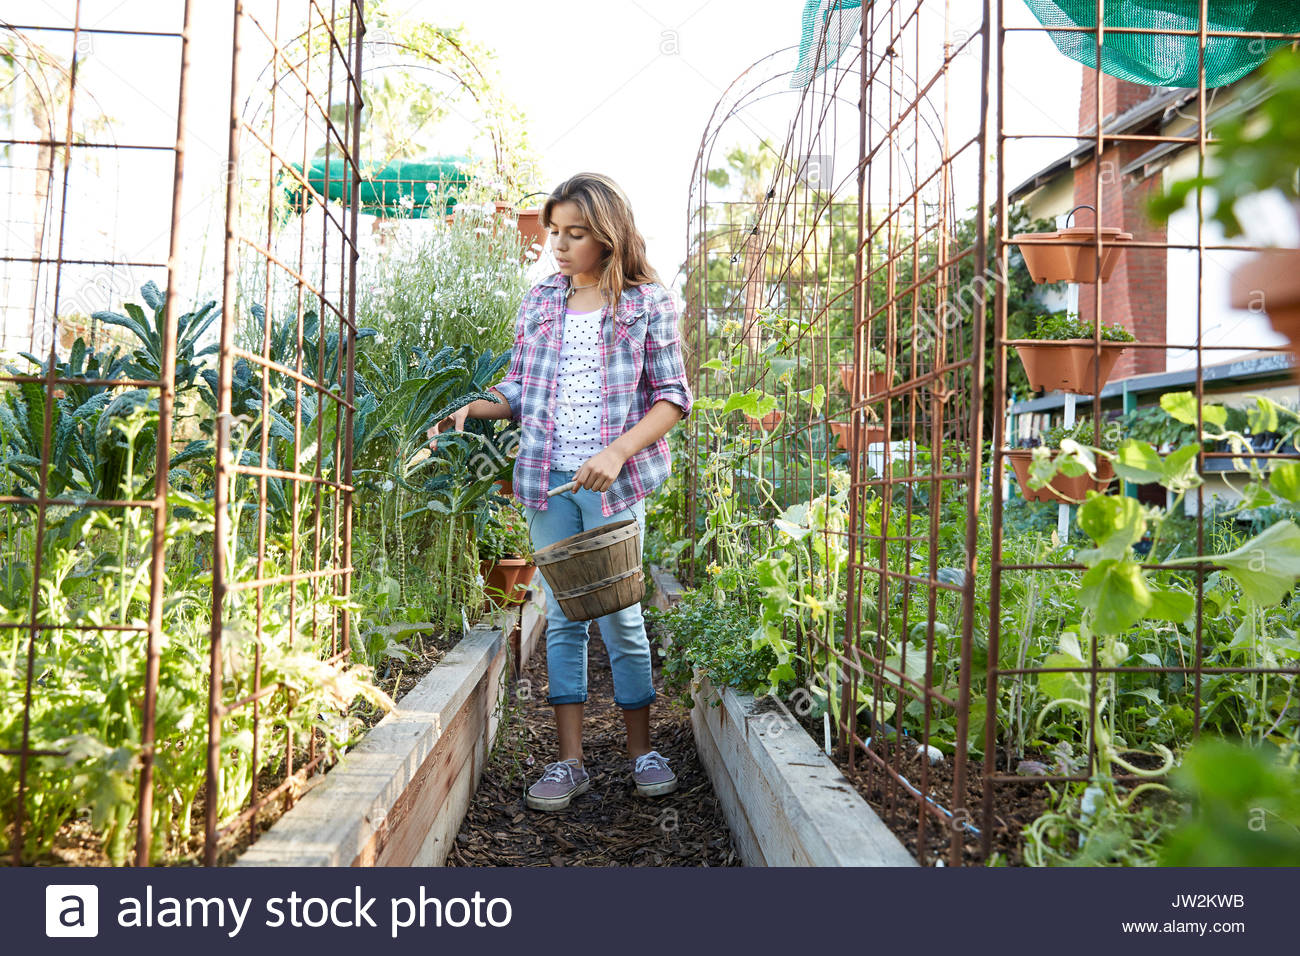 Latina girl harvesting vegetables in garden Stock Photo